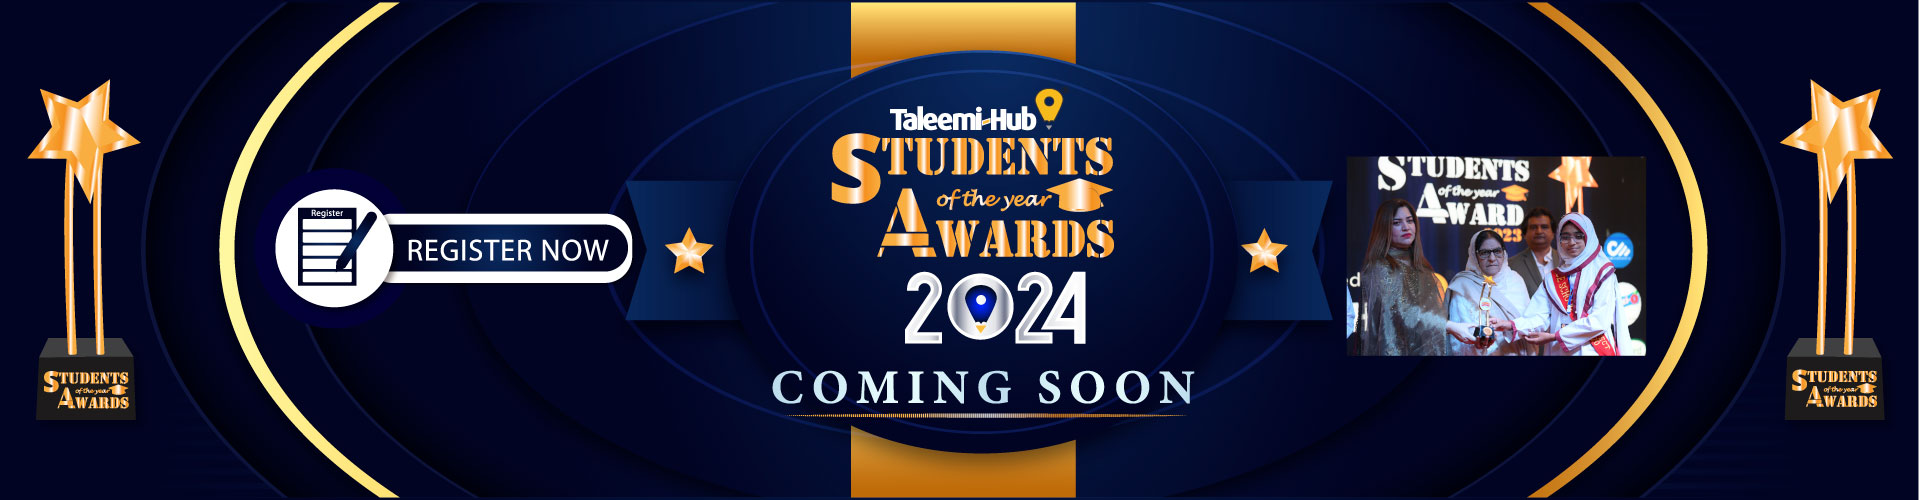 taleemihub.com - student of the year 2024